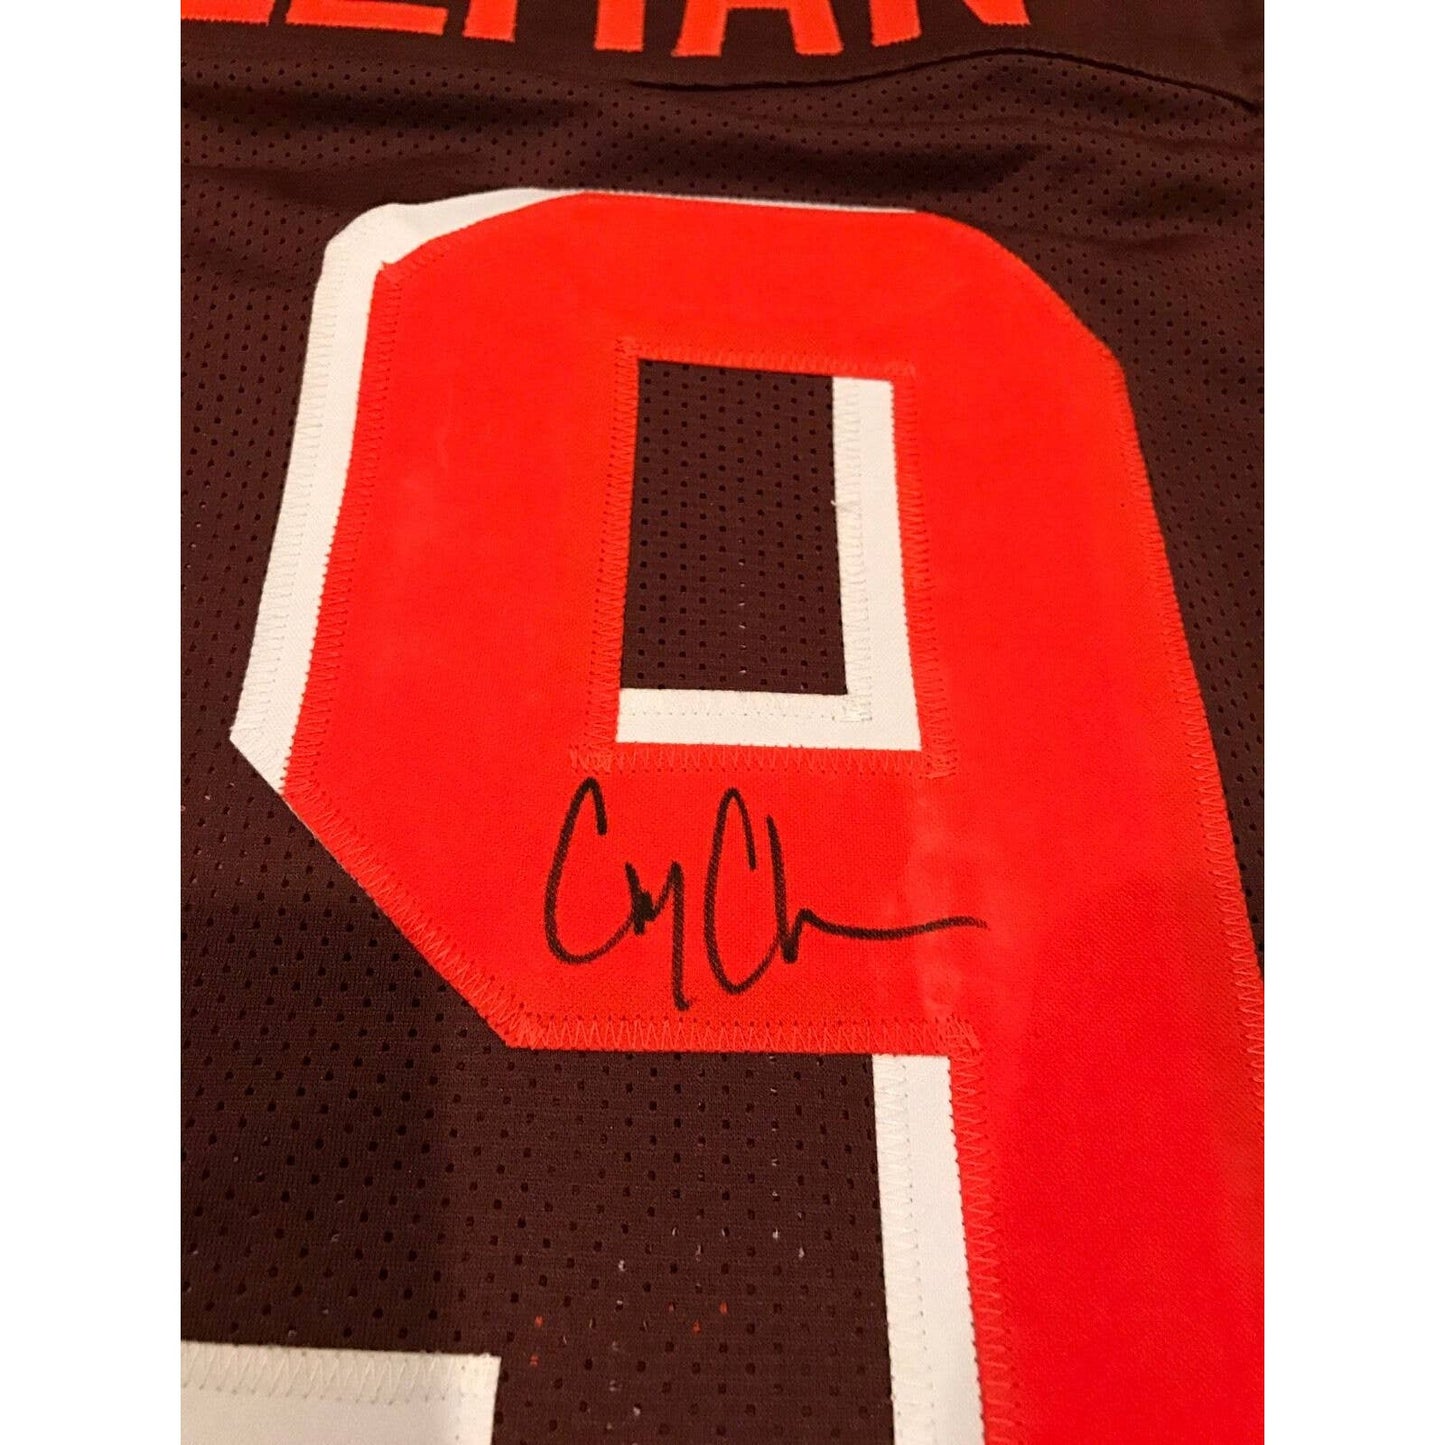 Corey Coleman Autographed Jersey LEAF COA Cleveland Browns nfl signed rookie - TreasuresEvolved